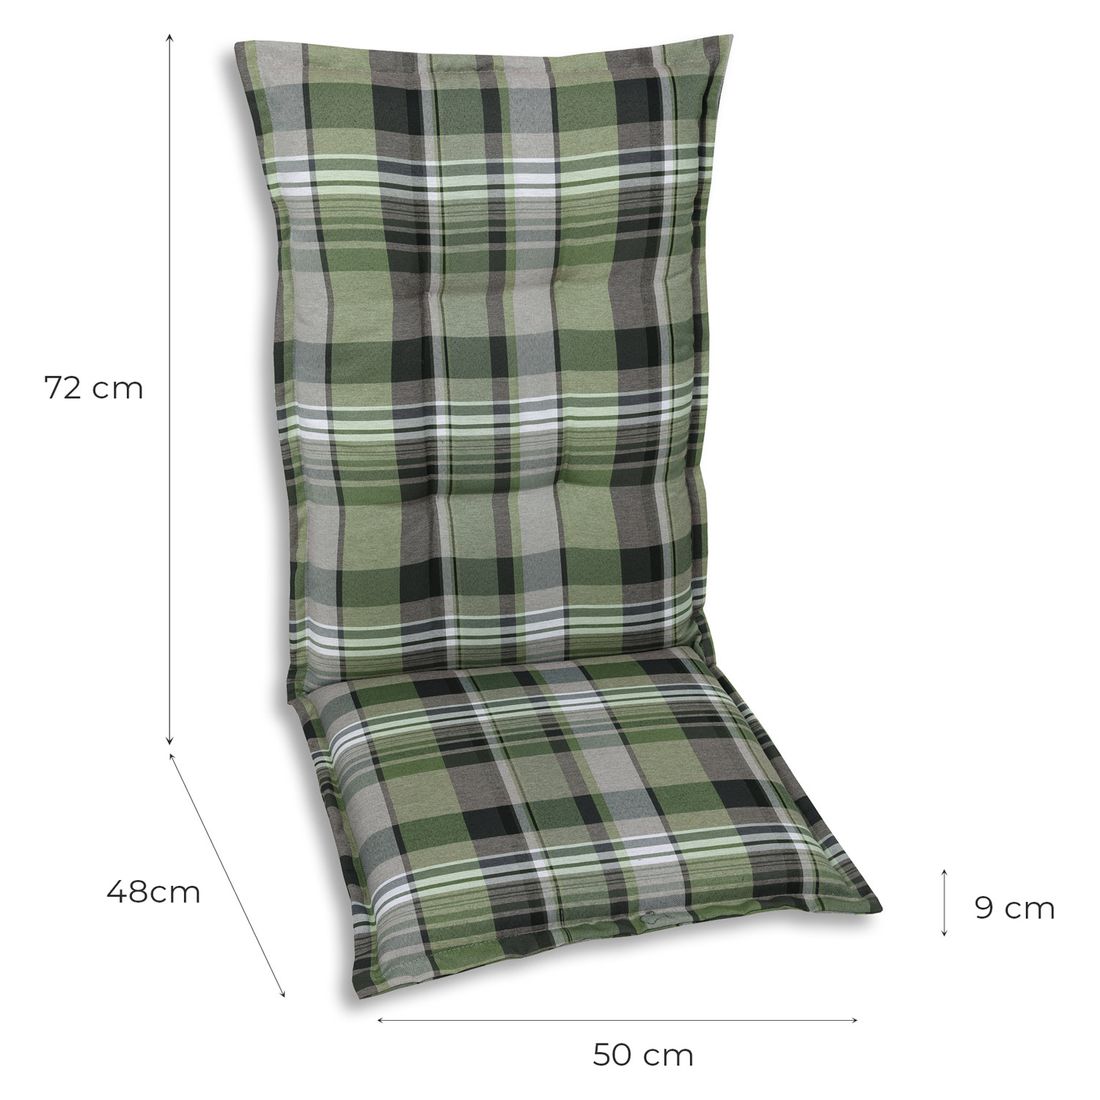 GO-DE Sesselauflage hoch 120x50cm Polyester